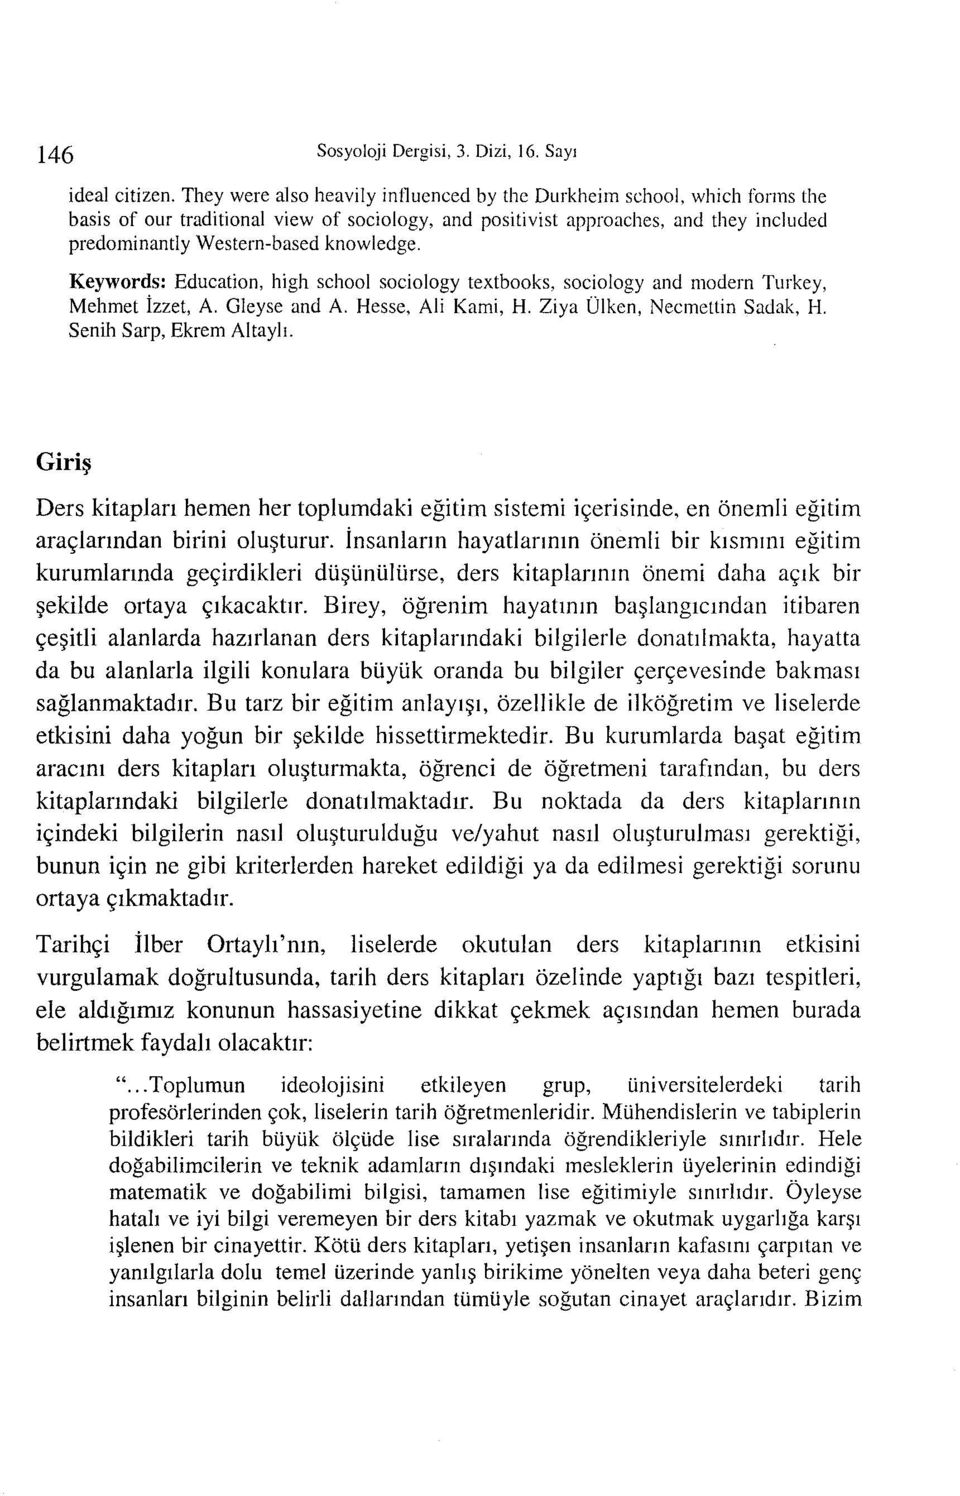 knowledge. Keywords: Education, high school sociology textbooks, sociology and modern Turkey, Mehmet izzet, A. Gleyse and A. Hesse, Ali Kami, H. Ziya Dlken, Necmellin Sadak, H.